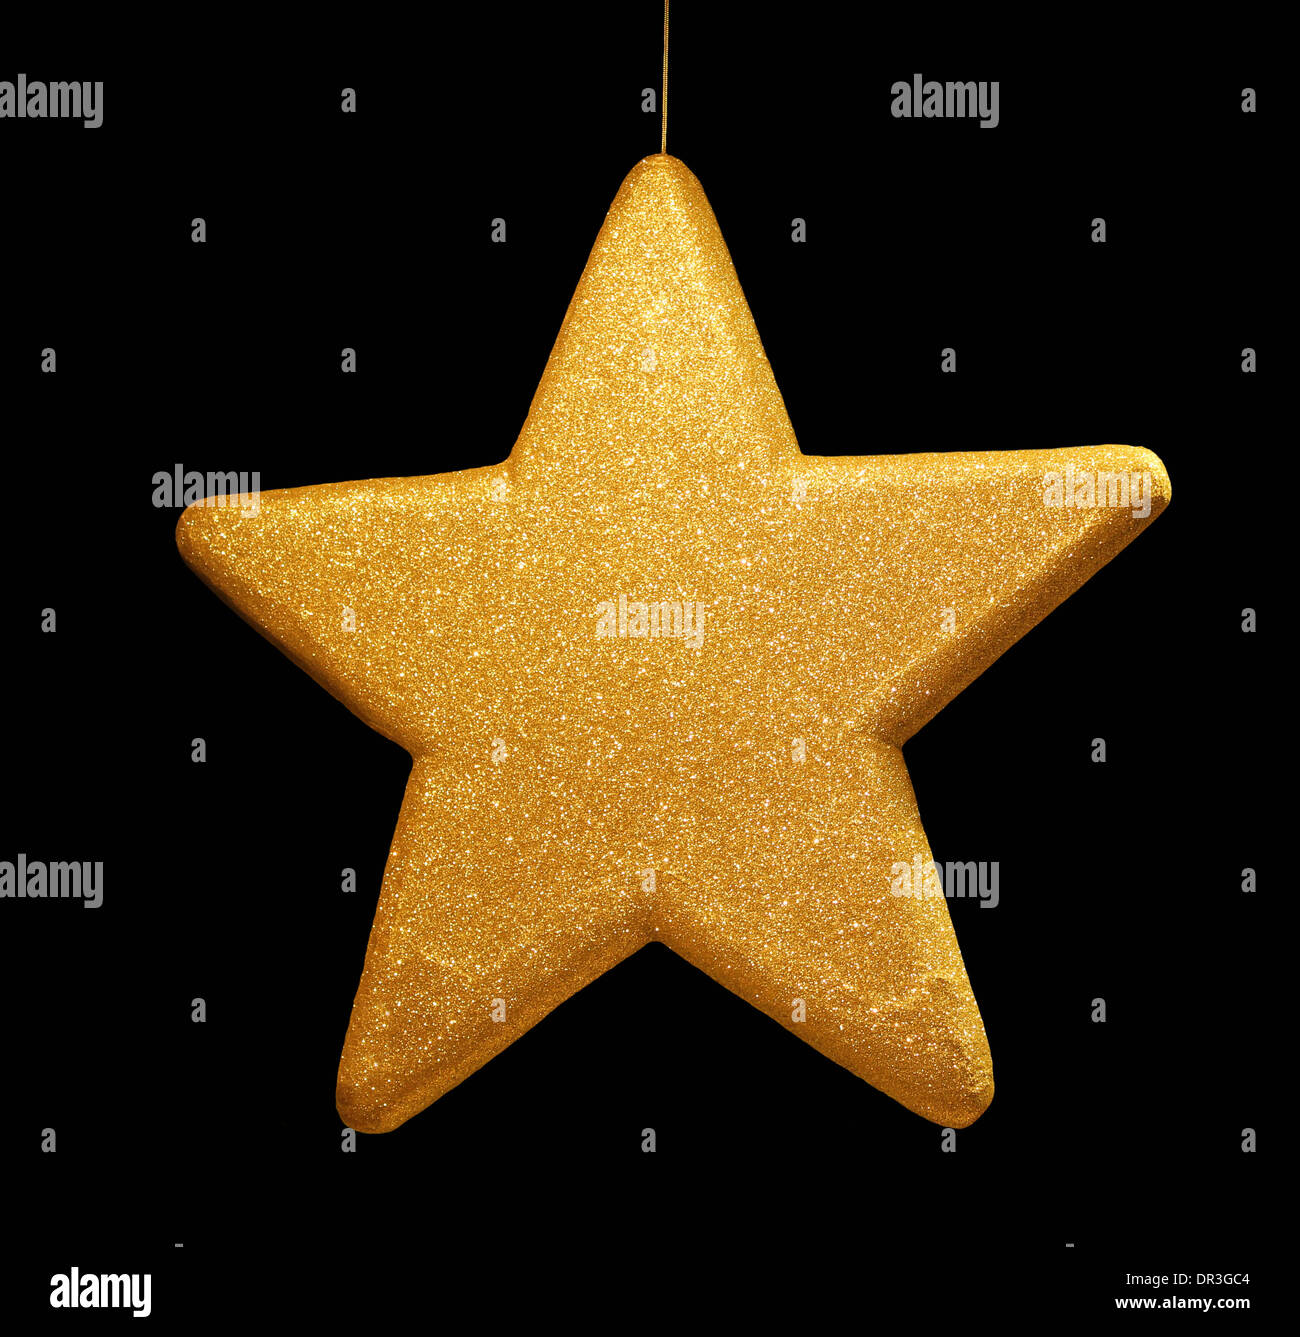 golden star Stock Photo